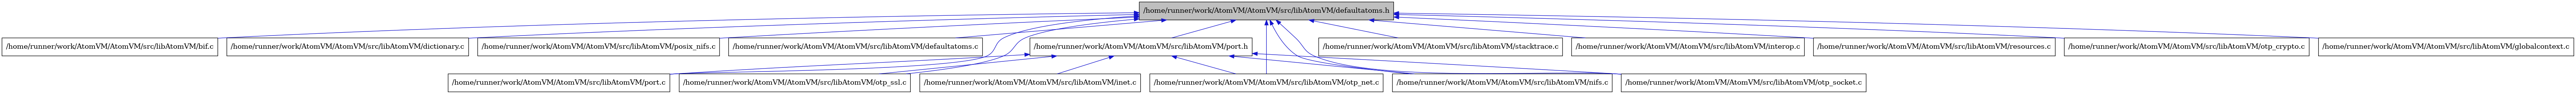 digraph {
    graph [bgcolor="#00000000"]
    node [shape=rectangle style=filled fillcolor="#FFFFFF" font=Helvetica padding=2]
    edge [color="#1414CE"]
    "2" [label="/home/runner/work/AtomVM/AtomVM/src/libAtomVM/bif.c" tooltip="/home/runner/work/AtomVM/AtomVM/src/libAtomVM/bif.c"]
    "4" [label="/home/runner/work/AtomVM/AtomVM/src/libAtomVM/dictionary.c" tooltip="/home/runner/work/AtomVM/AtomVM/src/libAtomVM/dictionary.c"]
    "15" [label="/home/runner/work/AtomVM/AtomVM/src/libAtomVM/posix_nifs.c" tooltip="/home/runner/work/AtomVM/AtomVM/src/libAtomVM/posix_nifs.c"]
    "3" [label="/home/runner/work/AtomVM/AtomVM/src/libAtomVM/defaultatoms.c" tooltip="/home/runner/work/AtomVM/AtomVM/src/libAtomVM/defaultatoms.c"]
    "1" [label="/home/runner/work/AtomVM/AtomVM/src/libAtomVM/defaultatoms.h" tooltip="/home/runner/work/AtomVM/AtomVM/src/libAtomVM/defaultatoms.h" fillcolor="#BFBFBF"]
    "14" [label="/home/runner/work/AtomVM/AtomVM/src/libAtomVM/inet.c" tooltip="/home/runner/work/AtomVM/AtomVM/src/libAtomVM/inet.c"]
    "12" [label="/home/runner/work/AtomVM/AtomVM/src/libAtomVM/port.c" tooltip="/home/runner/work/AtomVM/AtomVM/src/libAtomVM/port.c"]
    "13" [label="/home/runner/work/AtomVM/AtomVM/src/libAtomVM/port.h" tooltip="/home/runner/work/AtomVM/AtomVM/src/libAtomVM/port.h"]
    "17" [label="/home/runner/work/AtomVM/AtomVM/src/libAtomVM/stacktrace.c" tooltip="/home/runner/work/AtomVM/AtomVM/src/libAtomVM/stacktrace.c"]
    "6" [label="/home/runner/work/AtomVM/AtomVM/src/libAtomVM/interop.c" tooltip="/home/runner/work/AtomVM/AtomVM/src/libAtomVM/interop.c"]
    "11" [label="/home/runner/work/AtomVM/AtomVM/src/libAtomVM/otp_ssl.c" tooltip="/home/runner/work/AtomVM/AtomVM/src/libAtomVM/otp_ssl.c"]
    "16" [label="/home/runner/work/AtomVM/AtomVM/src/libAtomVM/resources.c" tooltip="/home/runner/work/AtomVM/AtomVM/src/libAtomVM/resources.c"]
    "8" [label="/home/runner/work/AtomVM/AtomVM/src/libAtomVM/otp_crypto.c" tooltip="/home/runner/work/AtomVM/AtomVM/src/libAtomVM/otp_crypto.c"]
    "9" [label="/home/runner/work/AtomVM/AtomVM/src/libAtomVM/otp_net.c" tooltip="/home/runner/work/AtomVM/AtomVM/src/libAtomVM/otp_net.c"]
    "7" [label="/home/runner/work/AtomVM/AtomVM/src/libAtomVM/nifs.c" tooltip="/home/runner/work/AtomVM/AtomVM/src/libAtomVM/nifs.c"]
    "5" [label="/home/runner/work/AtomVM/AtomVM/src/libAtomVM/globalcontext.c" tooltip="/home/runner/work/AtomVM/AtomVM/src/libAtomVM/globalcontext.c"]
    "10" [label="/home/runner/work/AtomVM/AtomVM/src/libAtomVM/otp_socket.c" tooltip="/home/runner/work/AtomVM/AtomVM/src/libAtomVM/otp_socket.c"]
    "1" -> "2" [dir=back tooltip="include"]
    "1" -> "3" [dir=back tooltip="include"]
    "1" -> "4" [dir=back tooltip="include"]
    "1" -> "5" [dir=back tooltip="include"]
    "1" -> "6" [dir=back tooltip="include"]
    "1" -> "7" [dir=back tooltip="include"]
    "1" -> "8" [dir=back tooltip="include"]
    "1" -> "9" [dir=back tooltip="include"]
    "1" -> "10" [dir=back tooltip="include"]
    "1" -> "11" [dir=back tooltip="include"]
    "1" -> "12" [dir=back tooltip="include"]
    "1" -> "13" [dir=back tooltip="include"]
    "1" -> "15" [dir=back tooltip="include"]
    "1" -> "16" [dir=back tooltip="include"]
    "1" -> "17" [dir=back tooltip="include"]
    "13" -> "14" [dir=back tooltip="include"]
    "13" -> "7" [dir=back tooltip="include"]
    "13" -> "9" [dir=back tooltip="include"]
    "13" -> "10" [dir=back tooltip="include"]
    "13" -> "11" [dir=back tooltip="include"]
    "13" -> "12" [dir=back tooltip="include"]
}